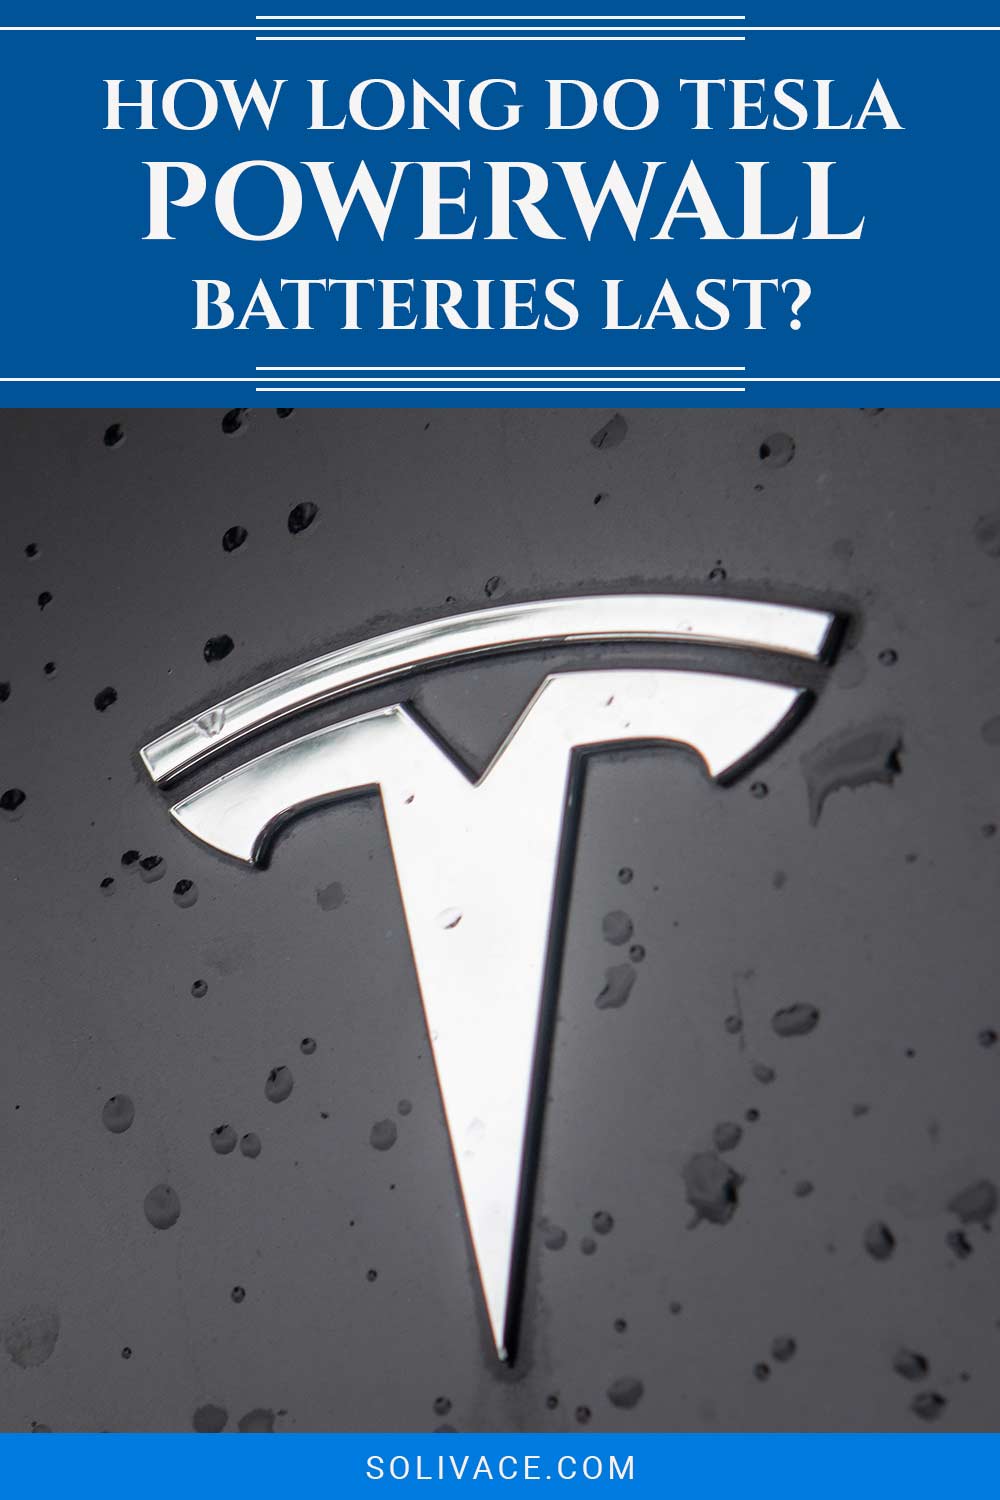 How Long Do Tesla Powerwall Batteries Last?